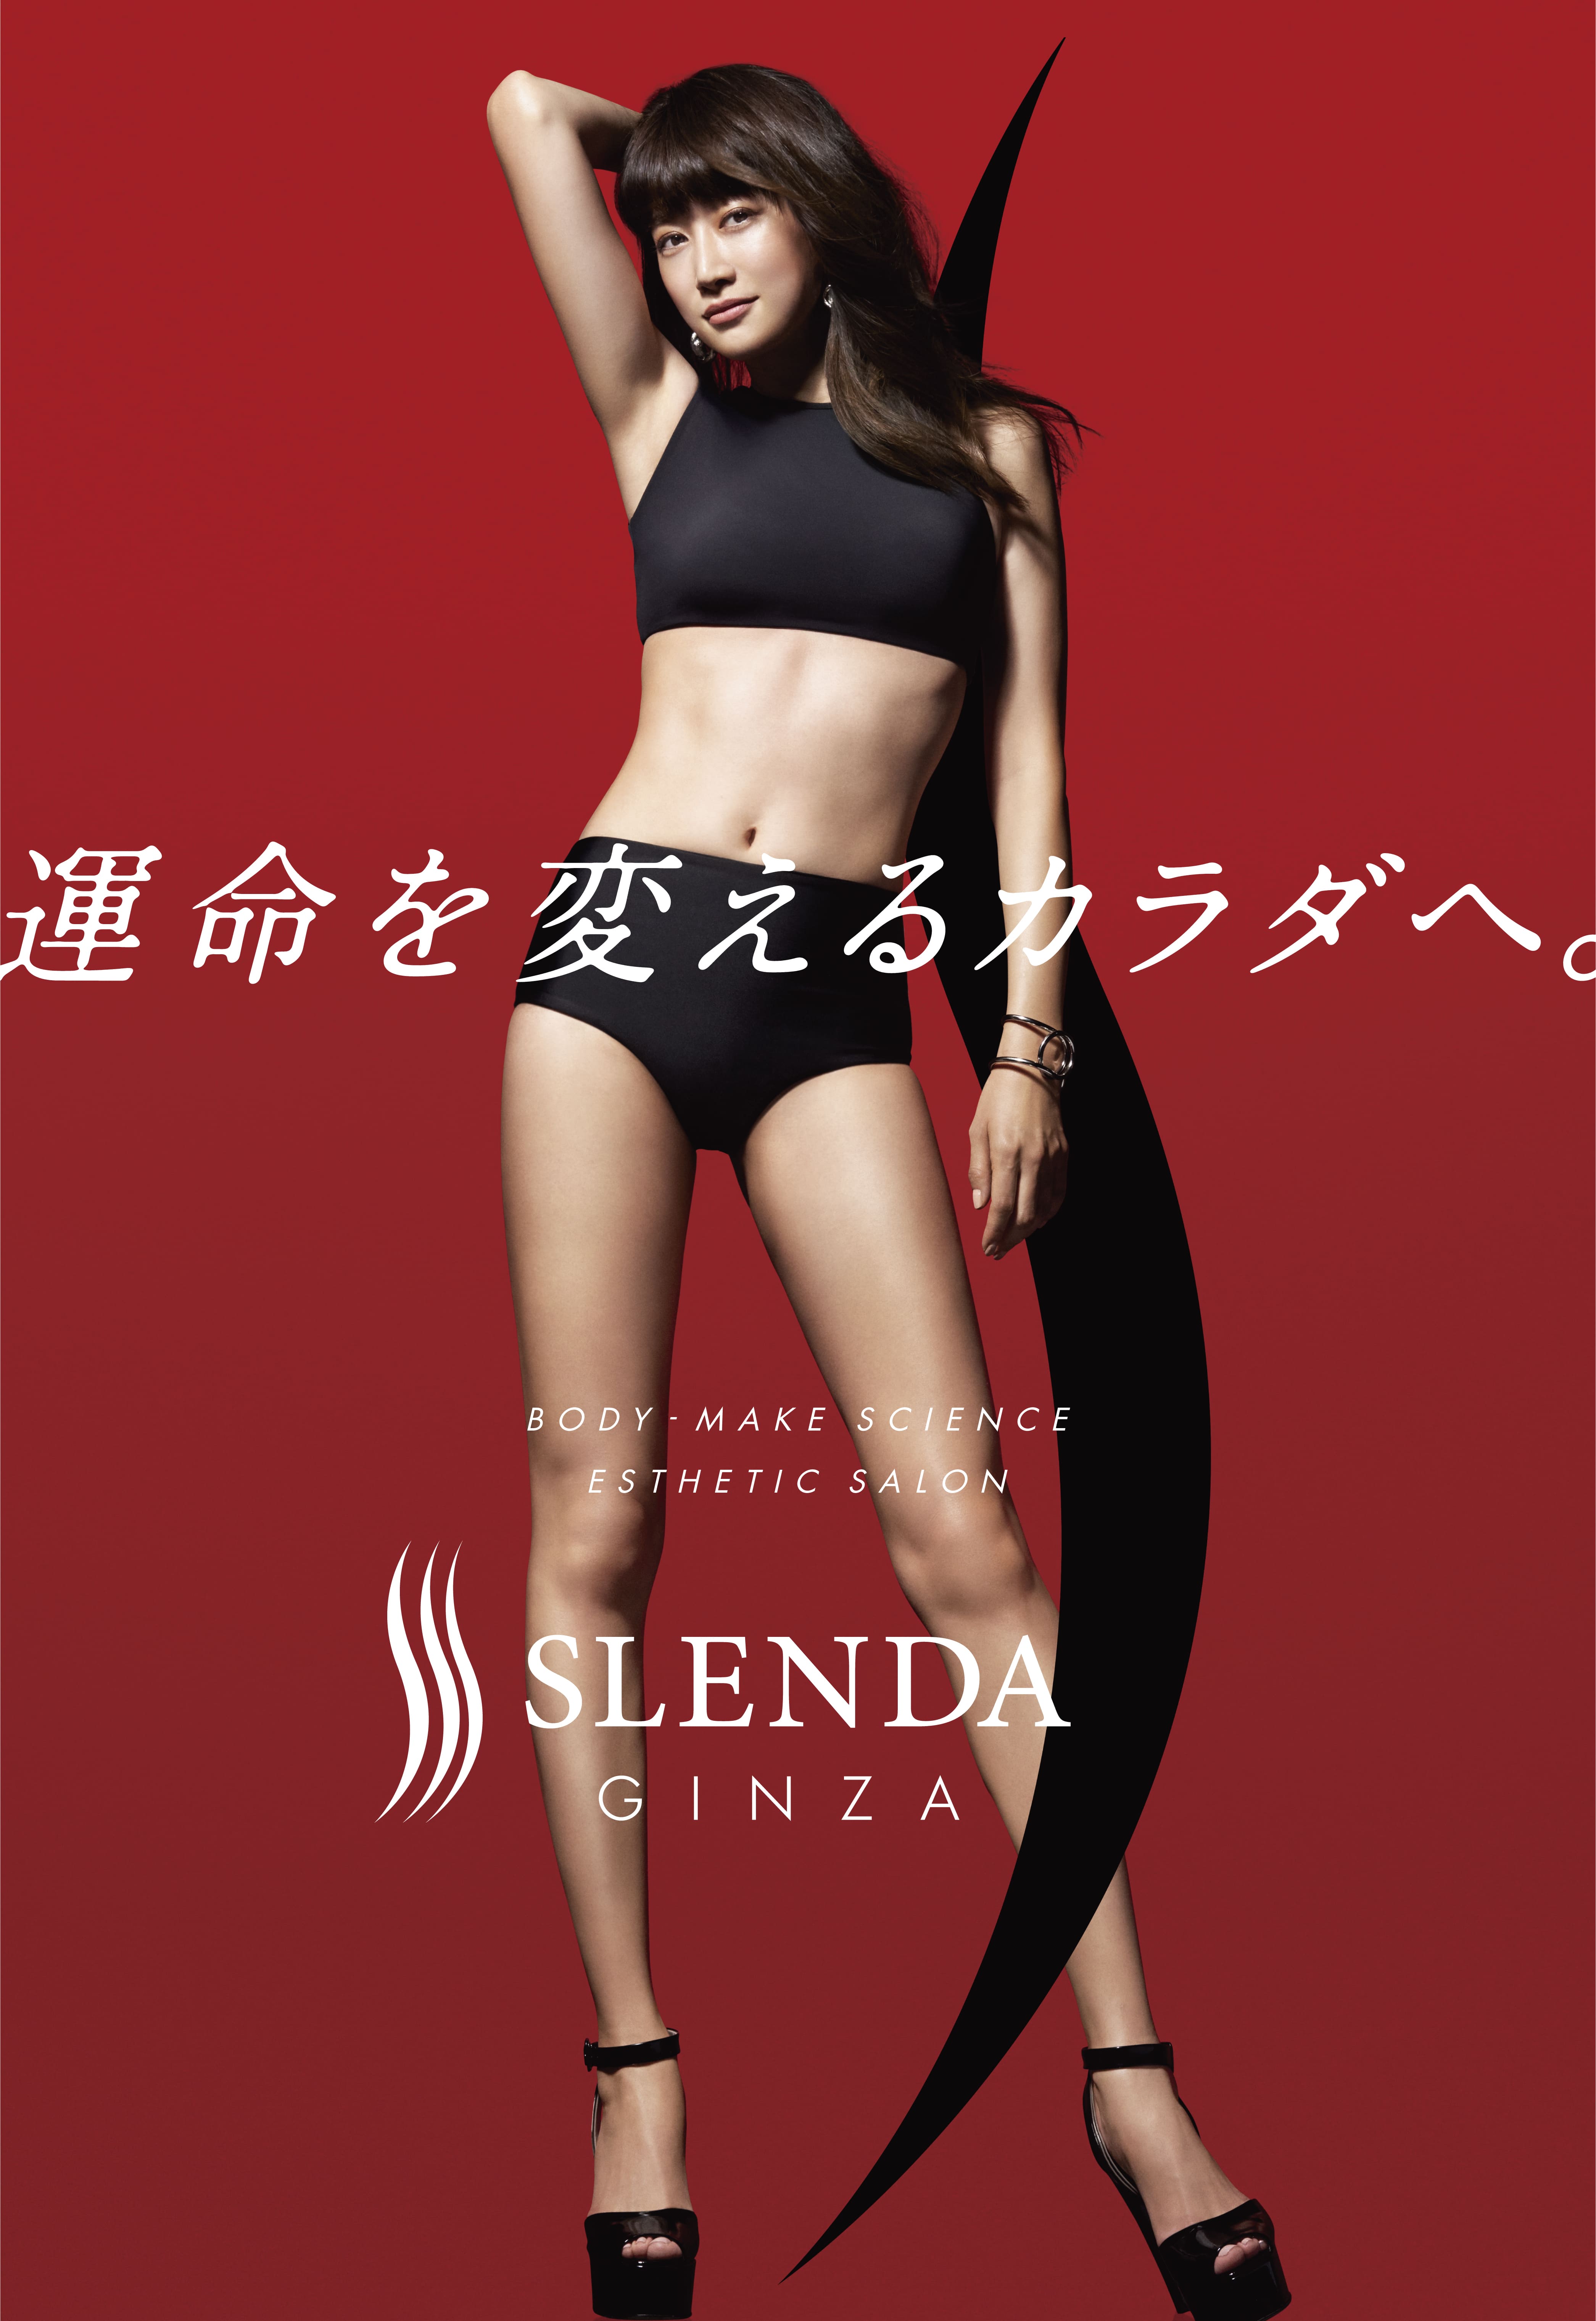 Slenda Ginza 2月1日より先行予約開始 働く女性に絶大な人気を誇るモデル ヨンア さんがブランドアイコンとして就任 株式会社ヴィエリスのプレスリリース